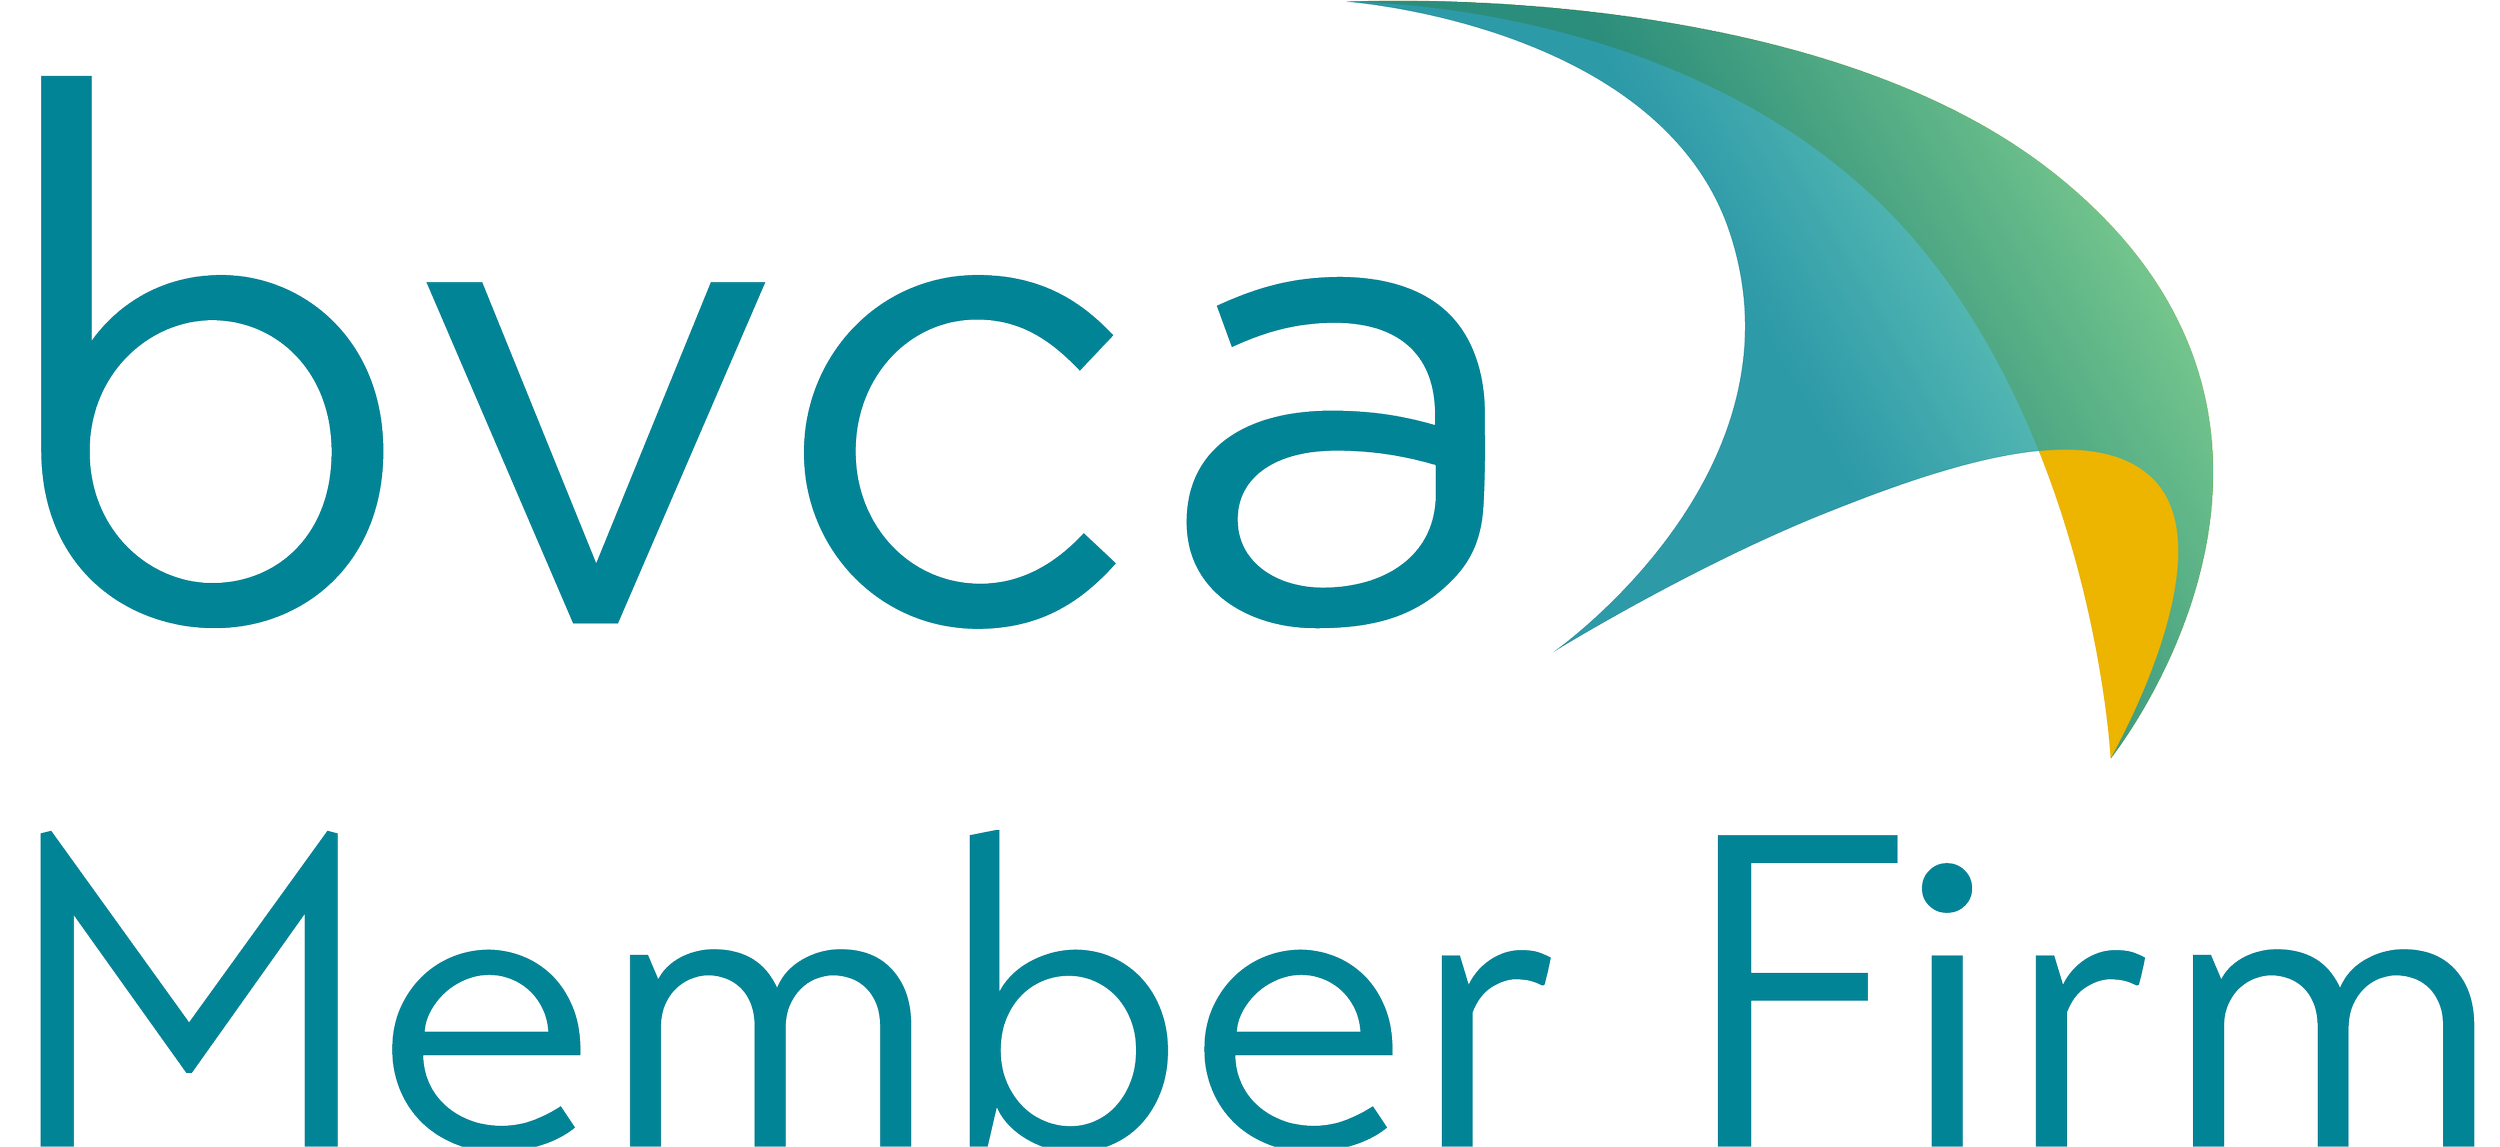 BVCA_Member_Firm_logo_Colour.png